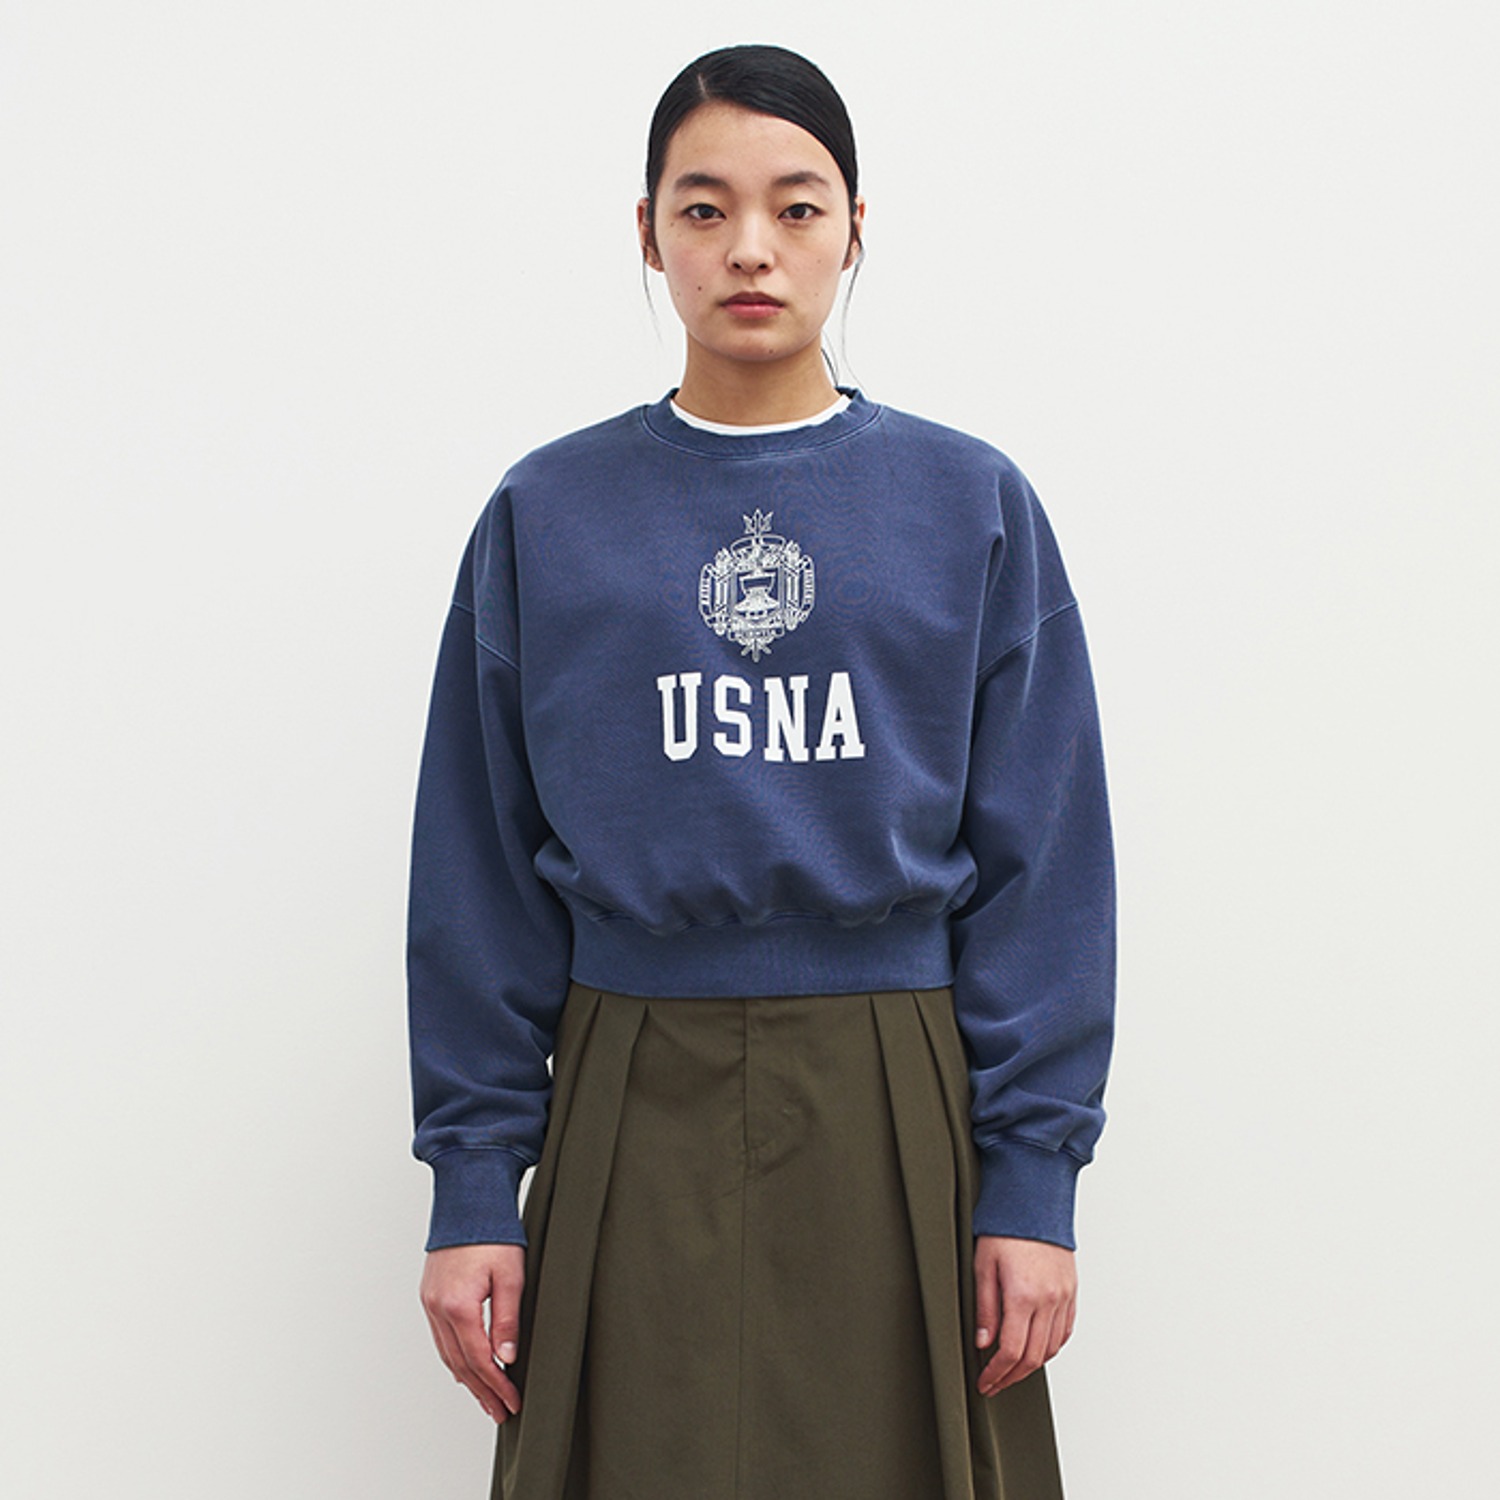 usna sweatshirts(womens) pigment navy